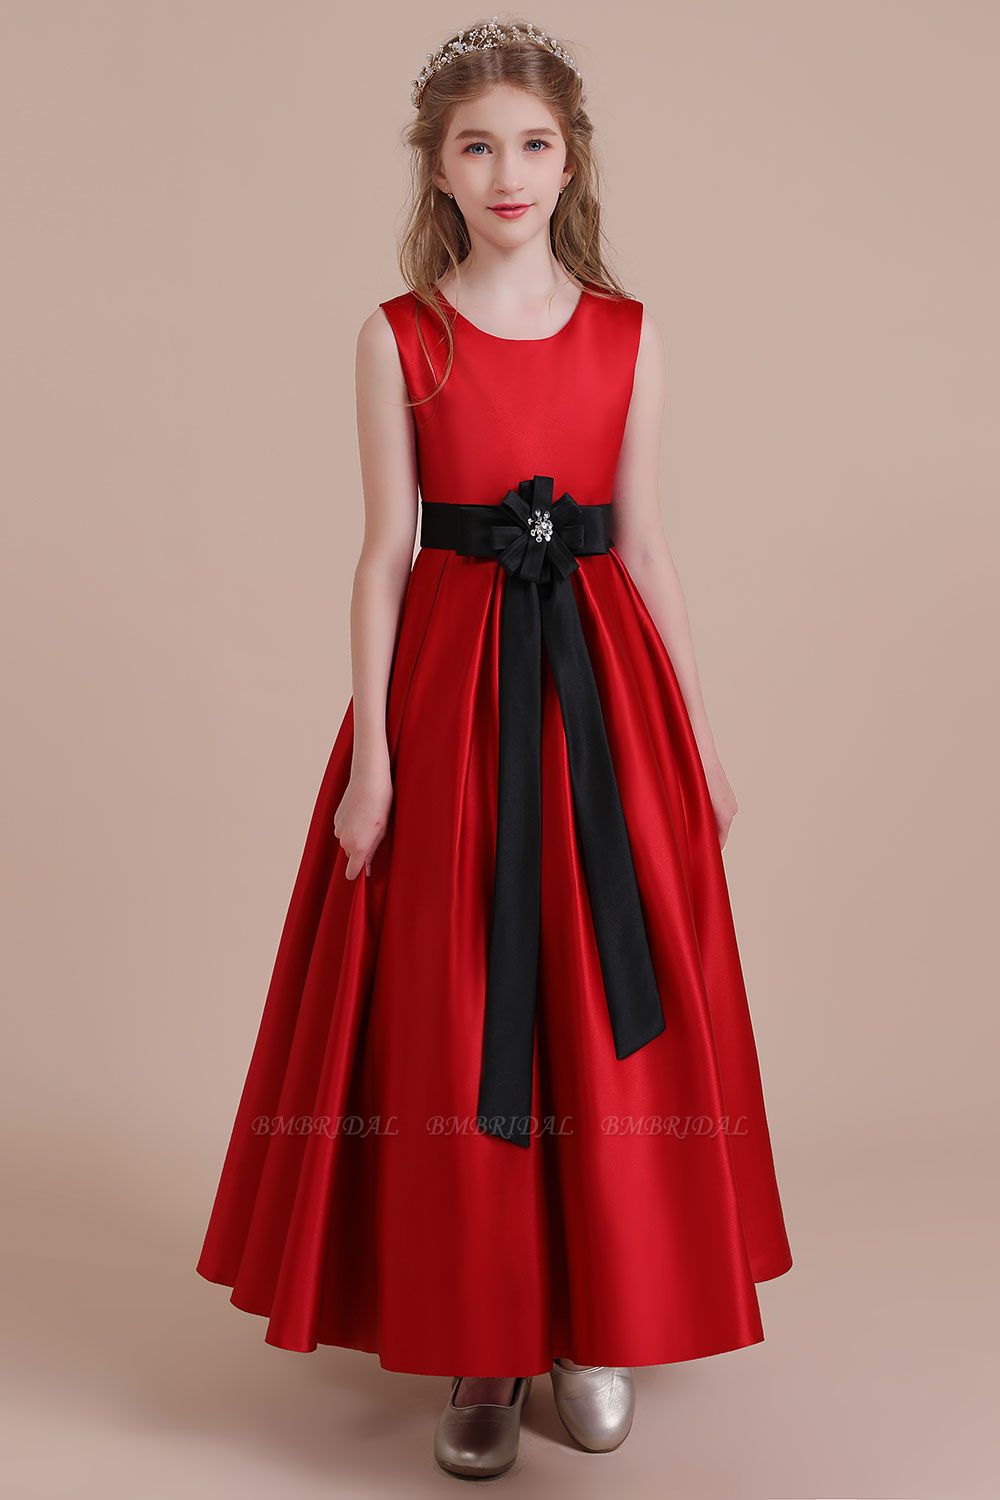 BMbridal A-Line Elegant Satin Flower Girl Dress Online